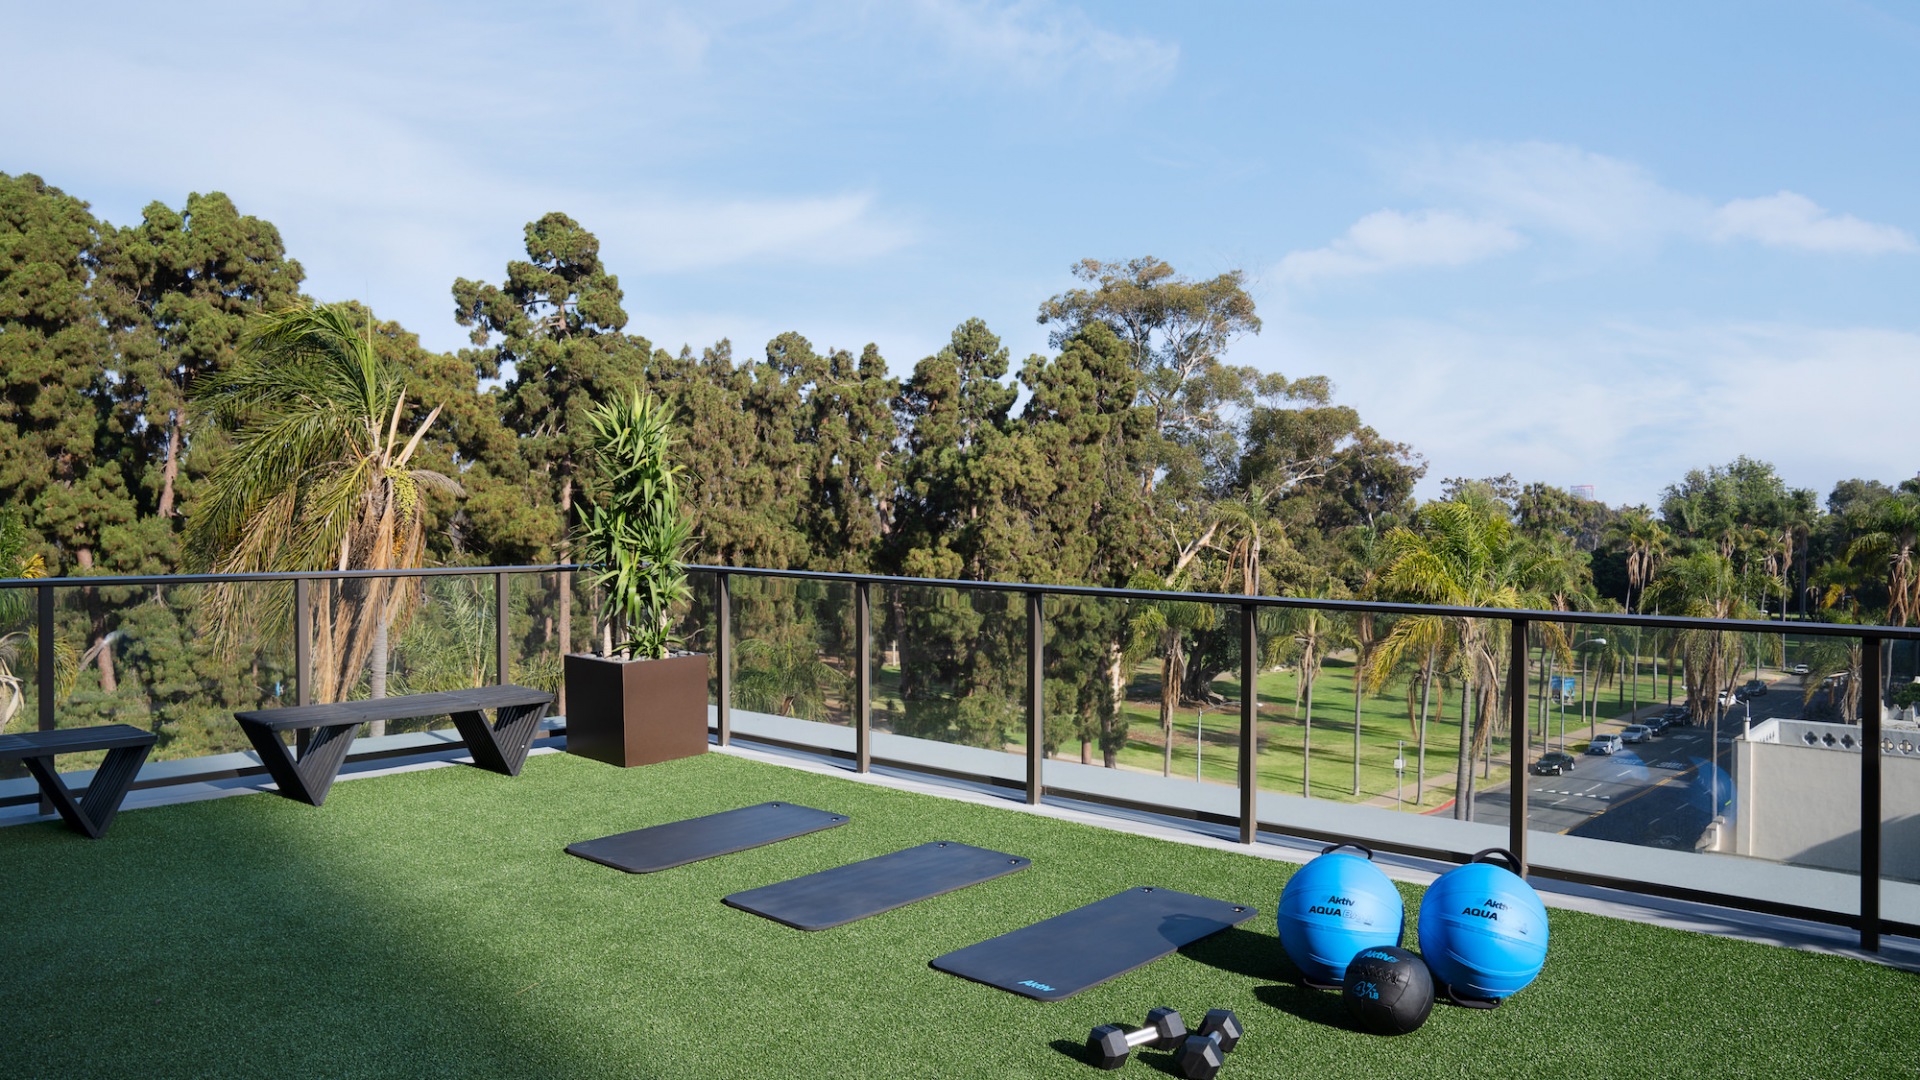 525 Fitness Outdoor Area overlooking Balboa Park